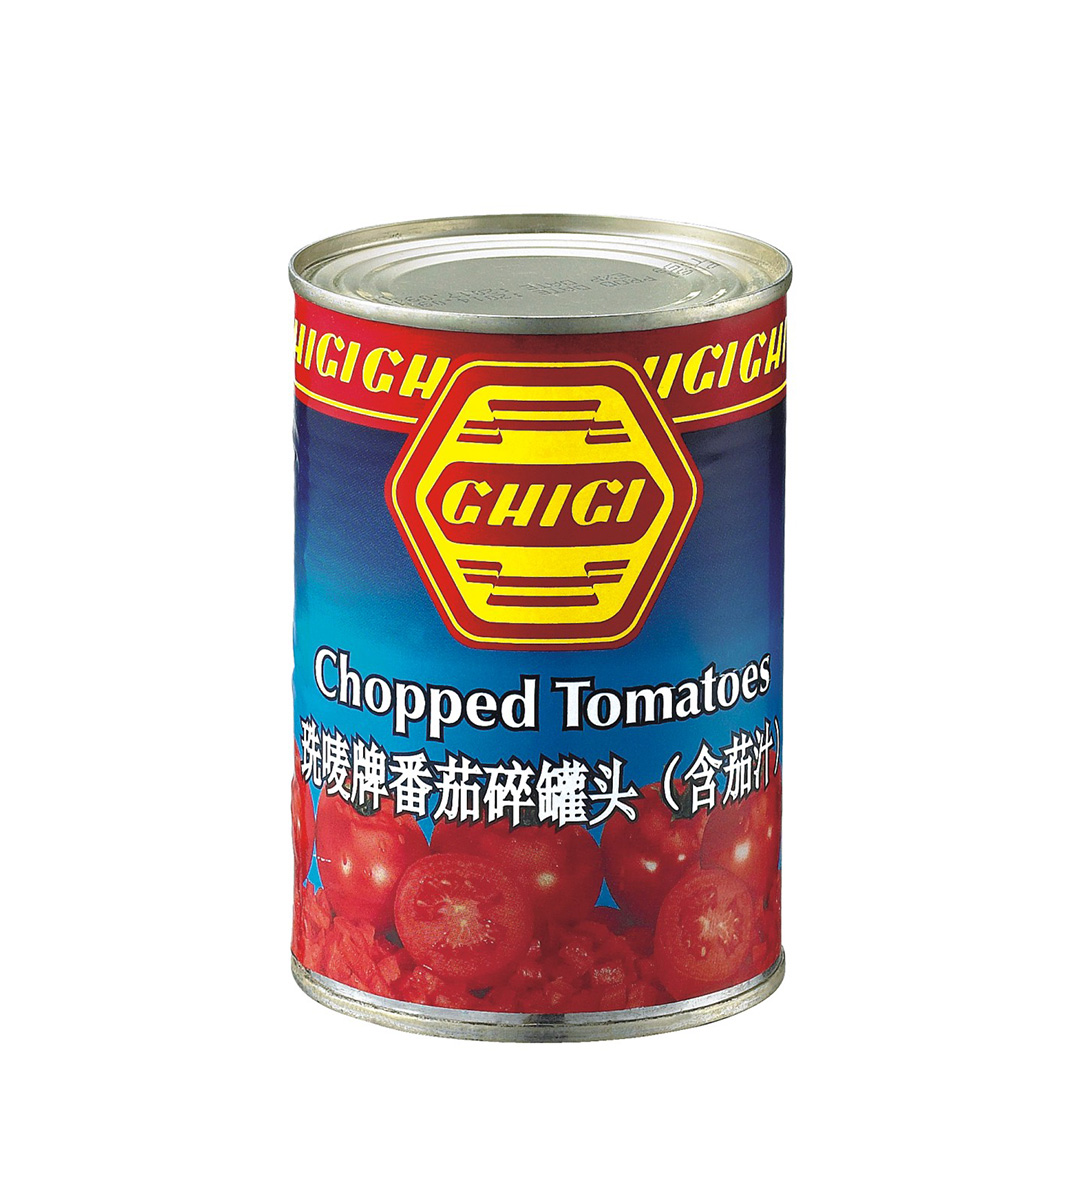 GHIGI Chopped Tomatoes 